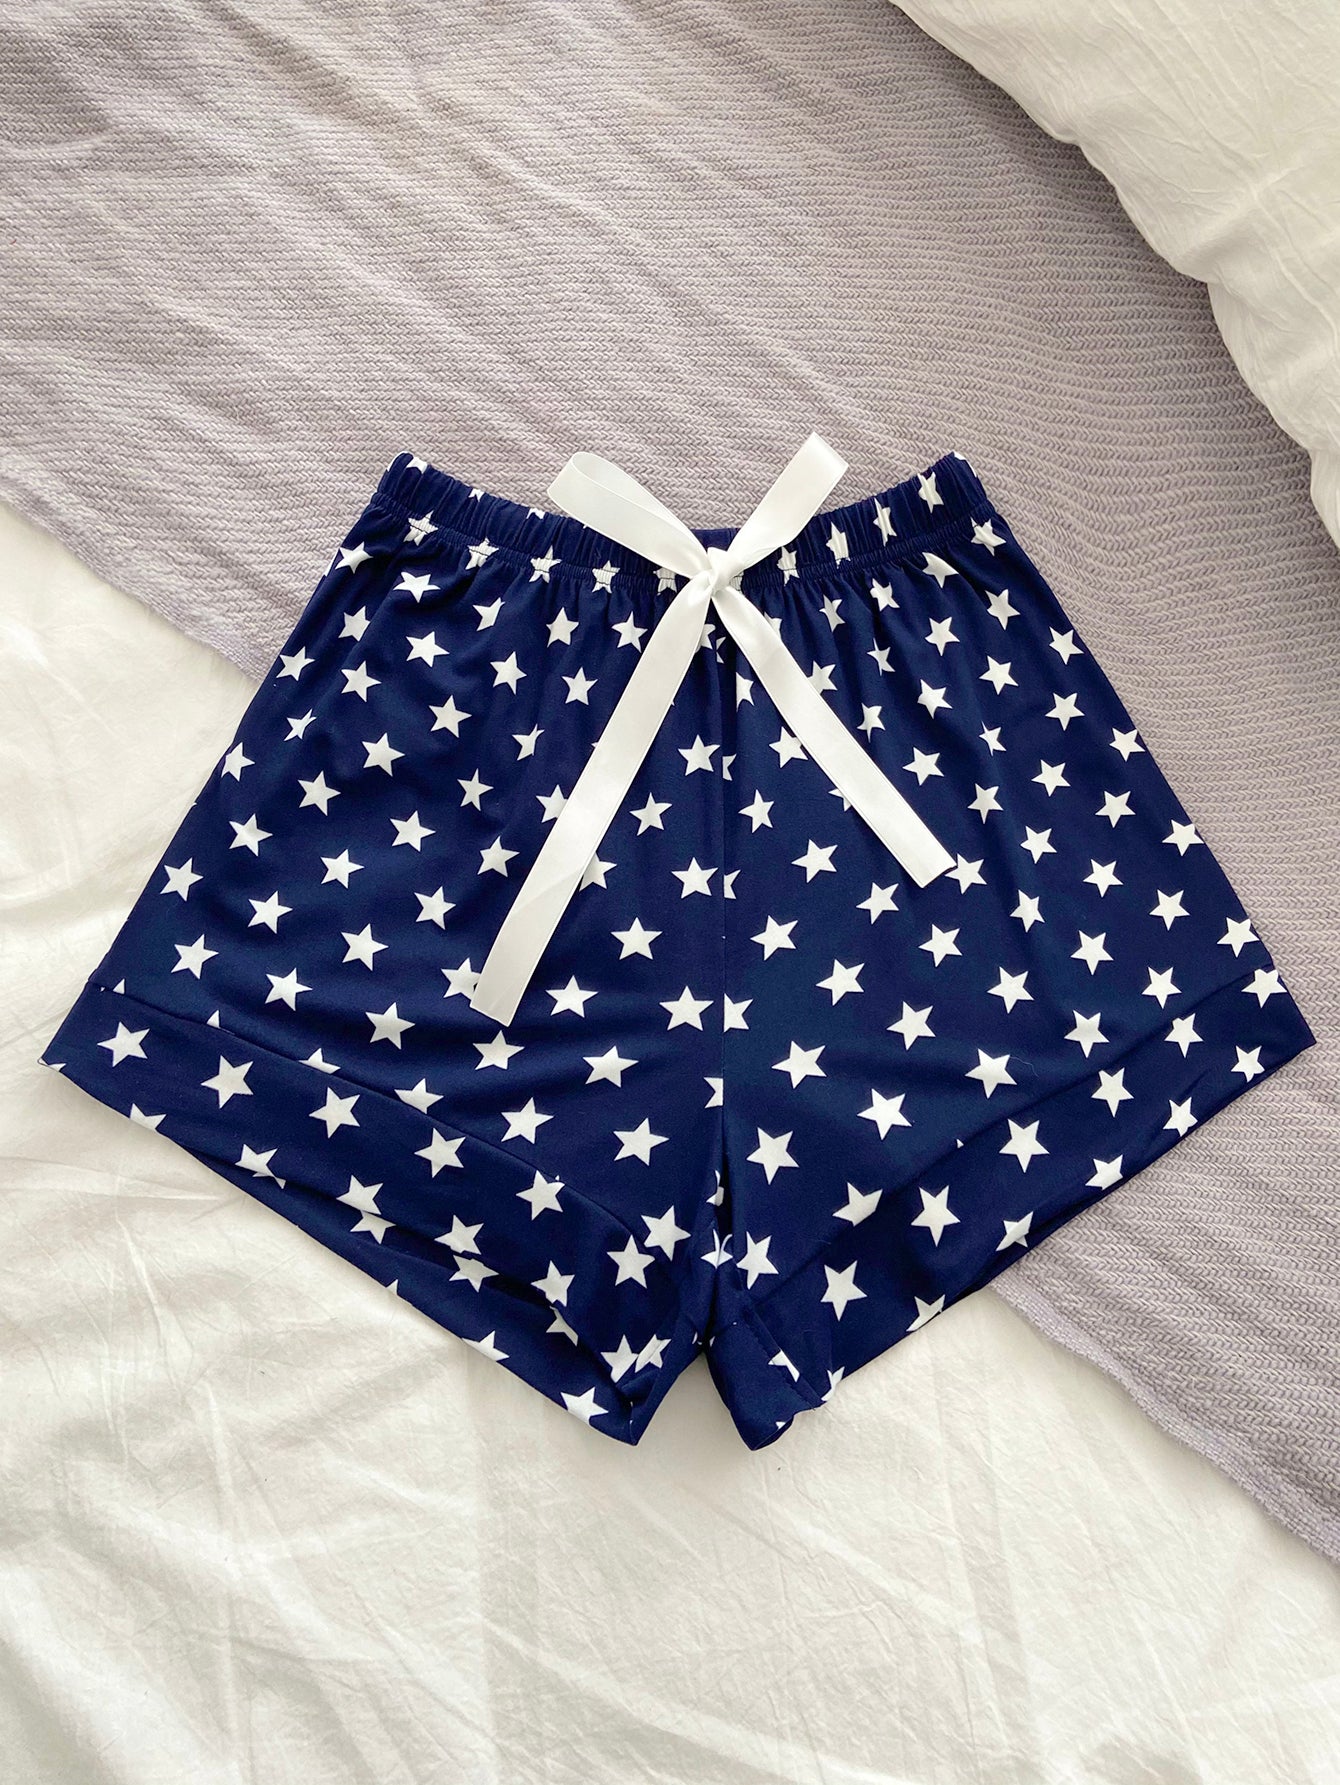 Women's Pajama Shorts Plaid PJ Bottoms Shorts Sleepwear Cute Sleep Pants Sai Feel